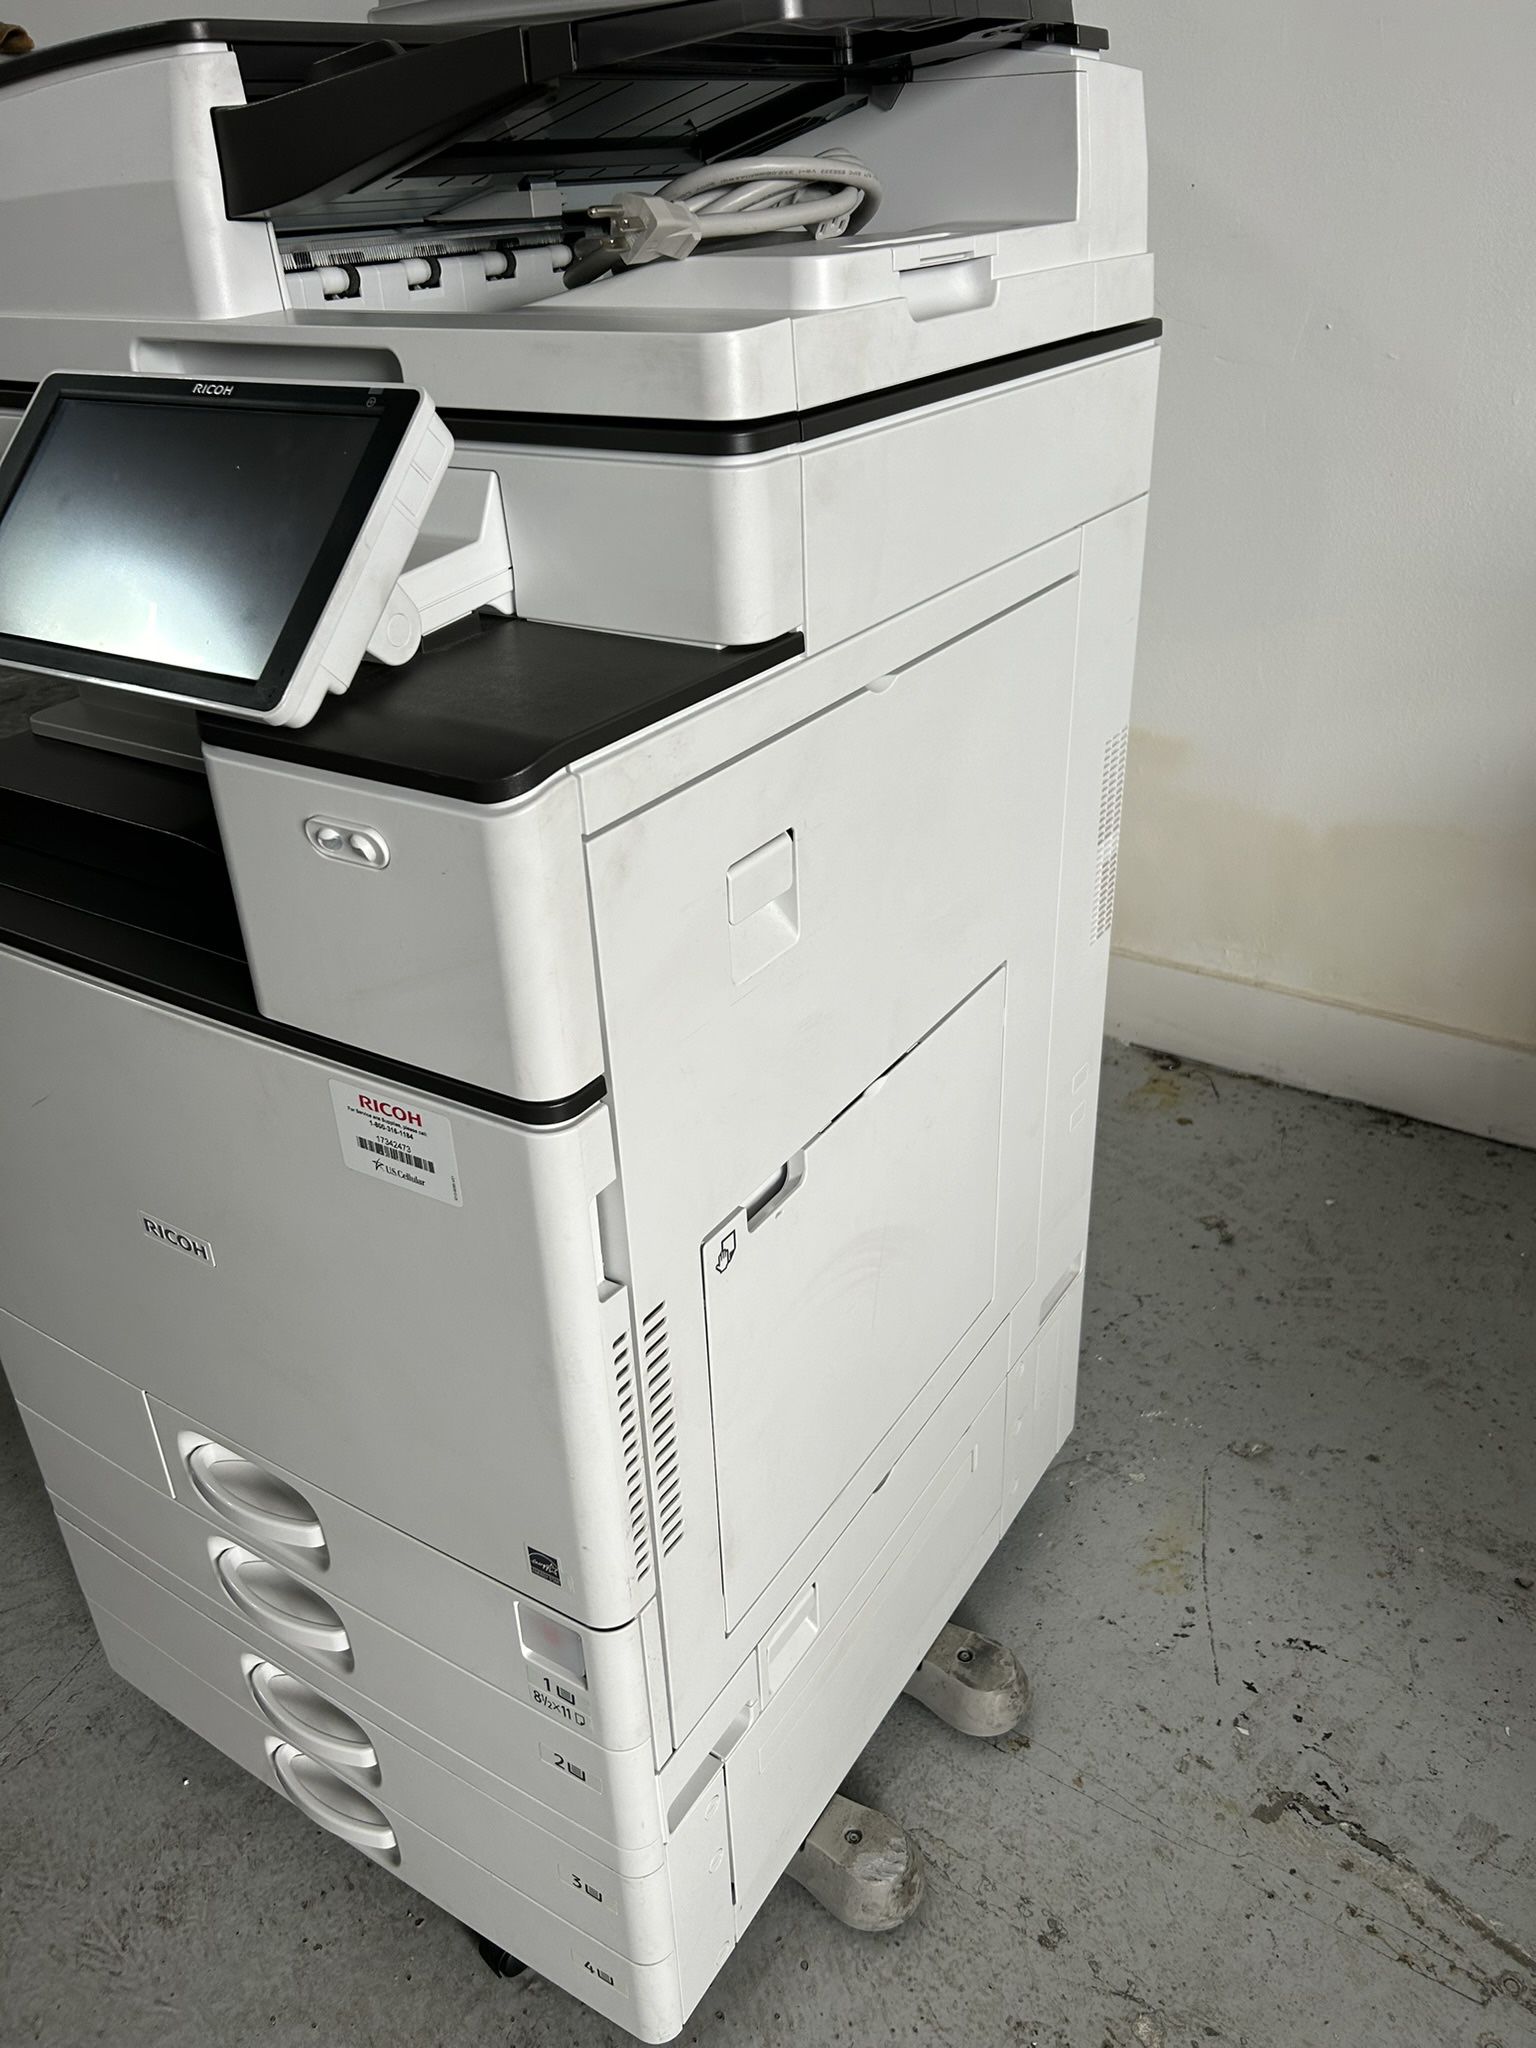 Office Printer Mp C3004ex Color Laser Copier Machine New